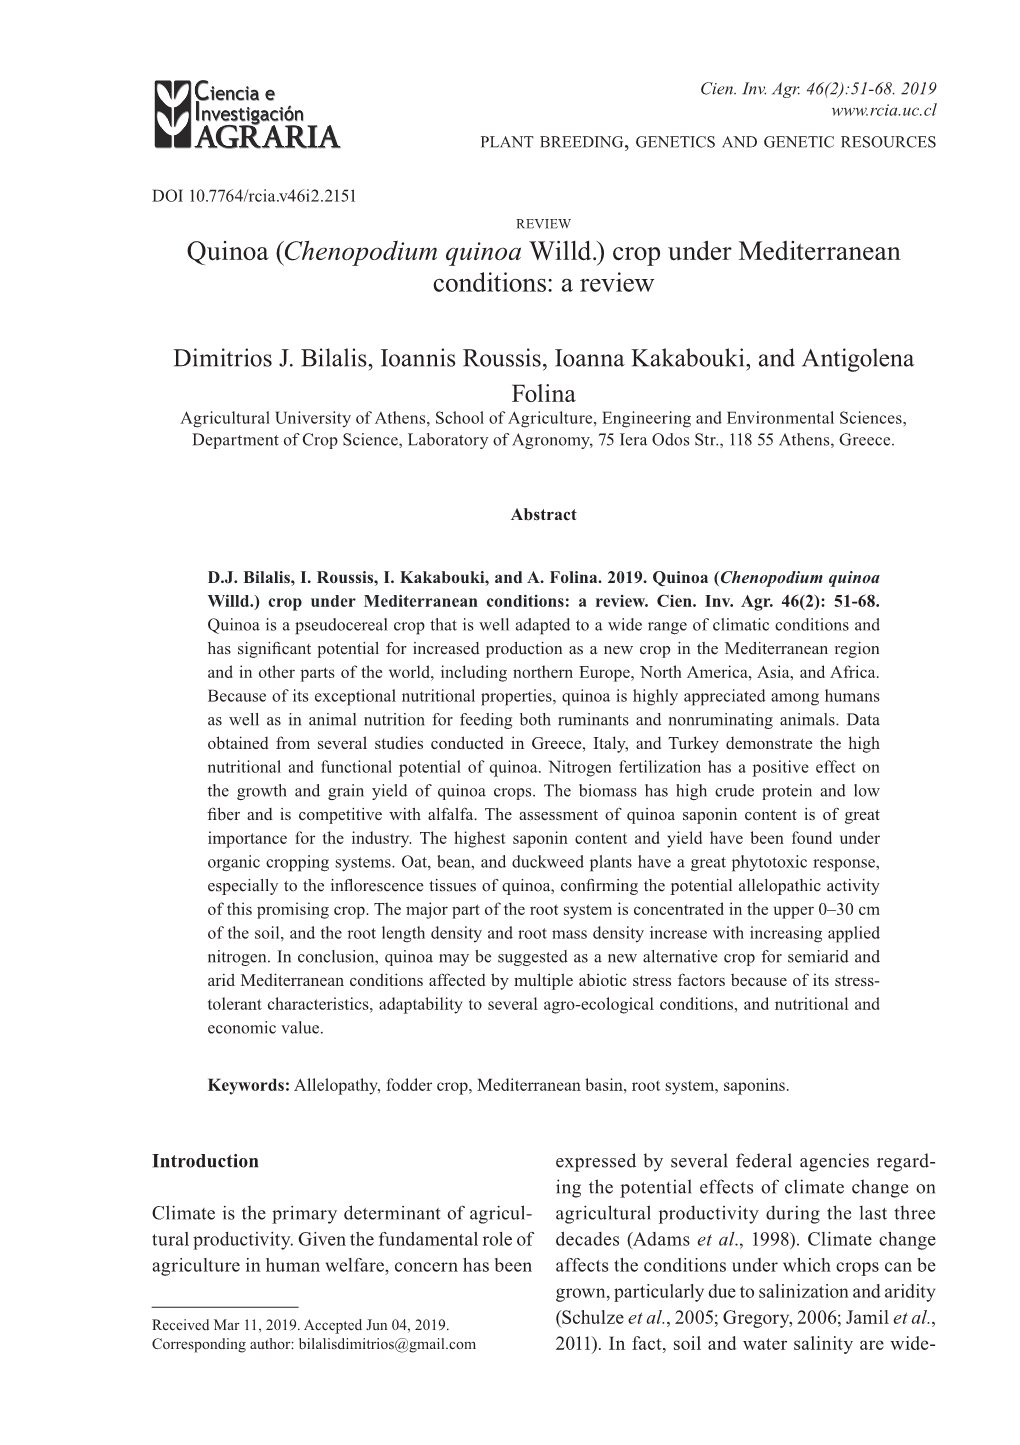 Chenopodium Quinoa Willd.) Crop Under Mediterranean Conditions: a Review